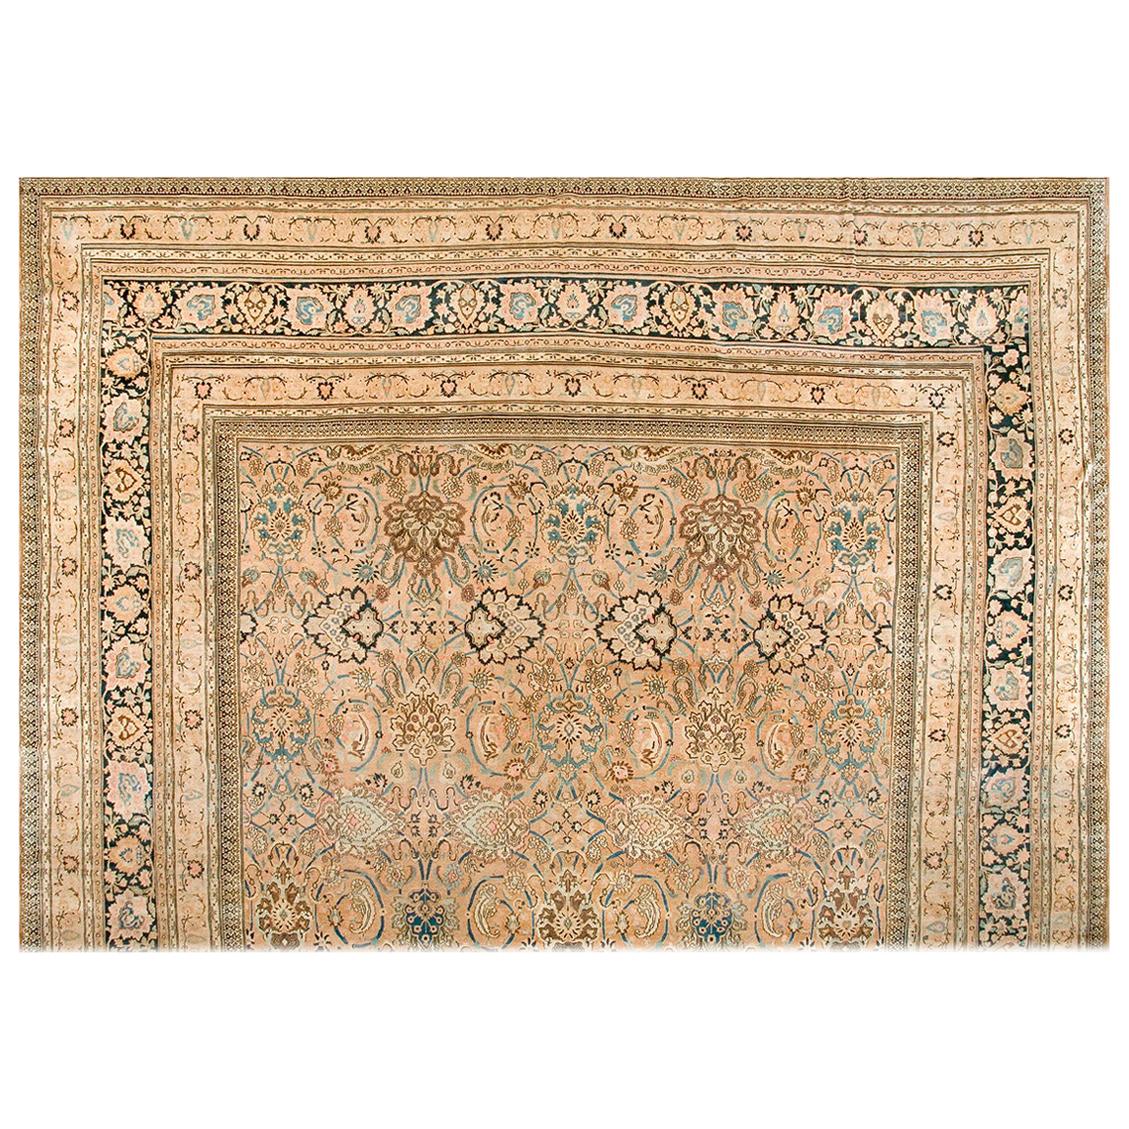 Late 19th Century N.E. Persian Khorasan Moud Carpet (20'3" x 30'4" - 618 x 925) For Sale